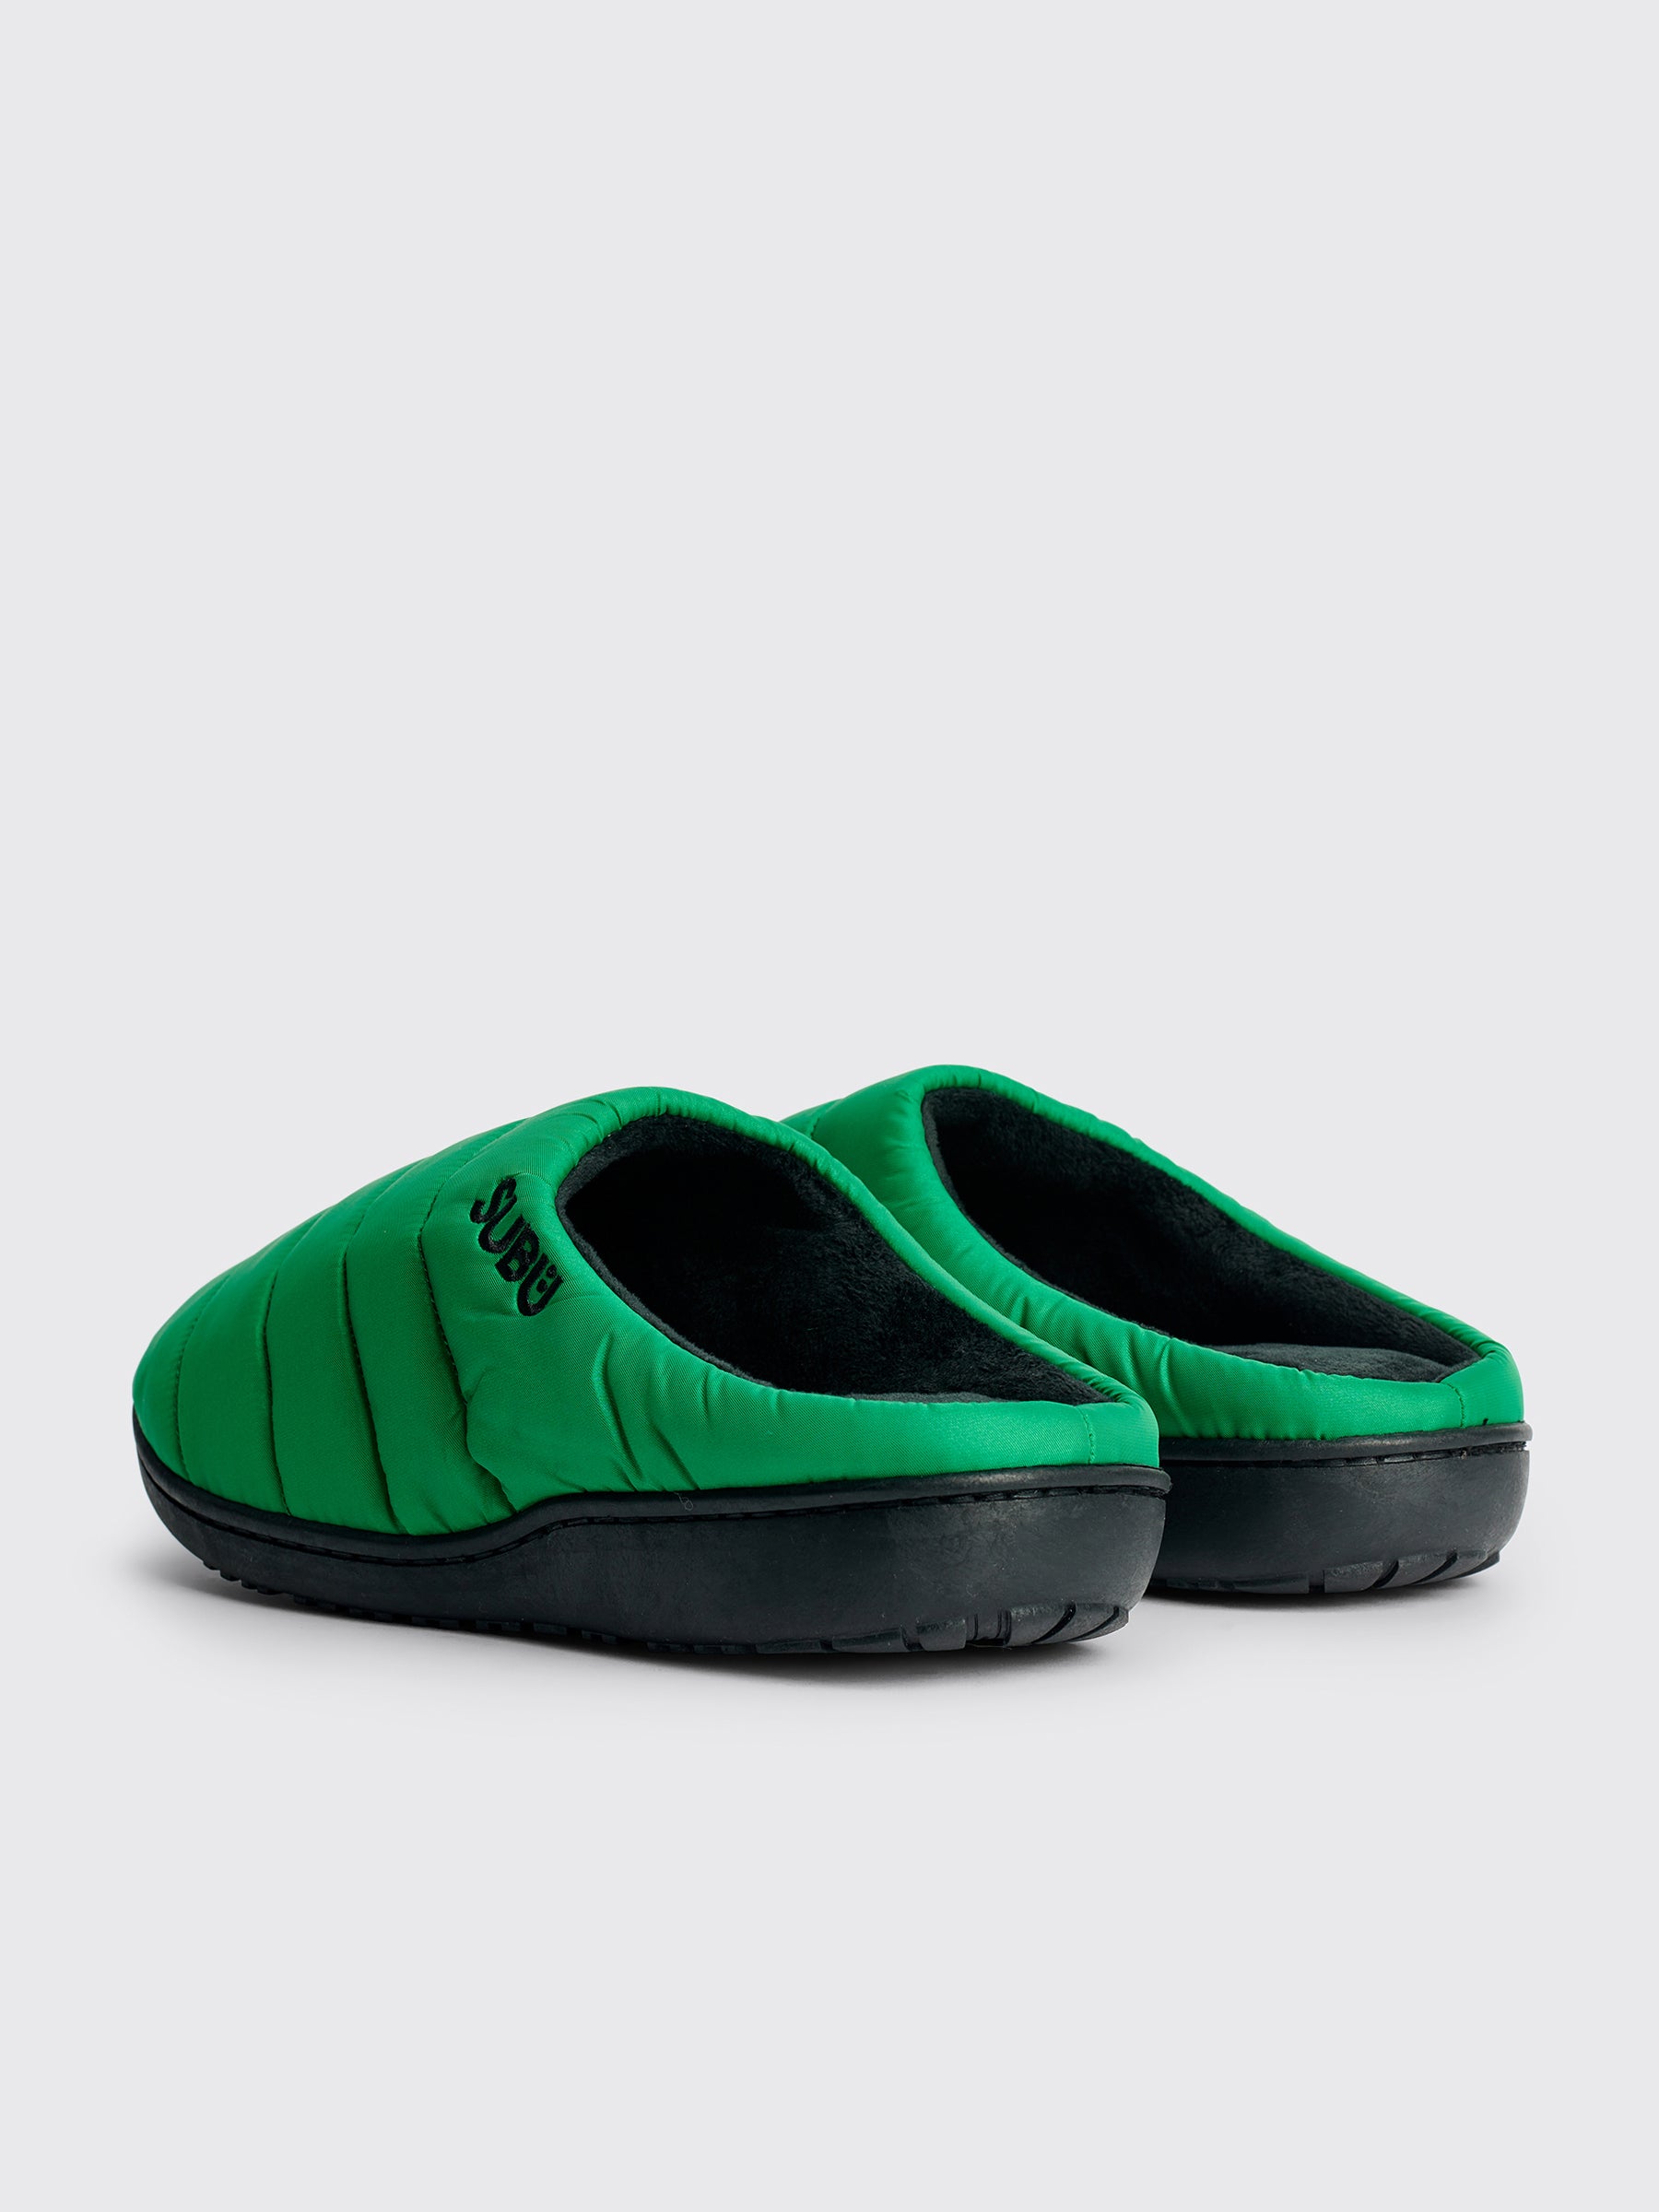 SUBU Classic Slippers Green